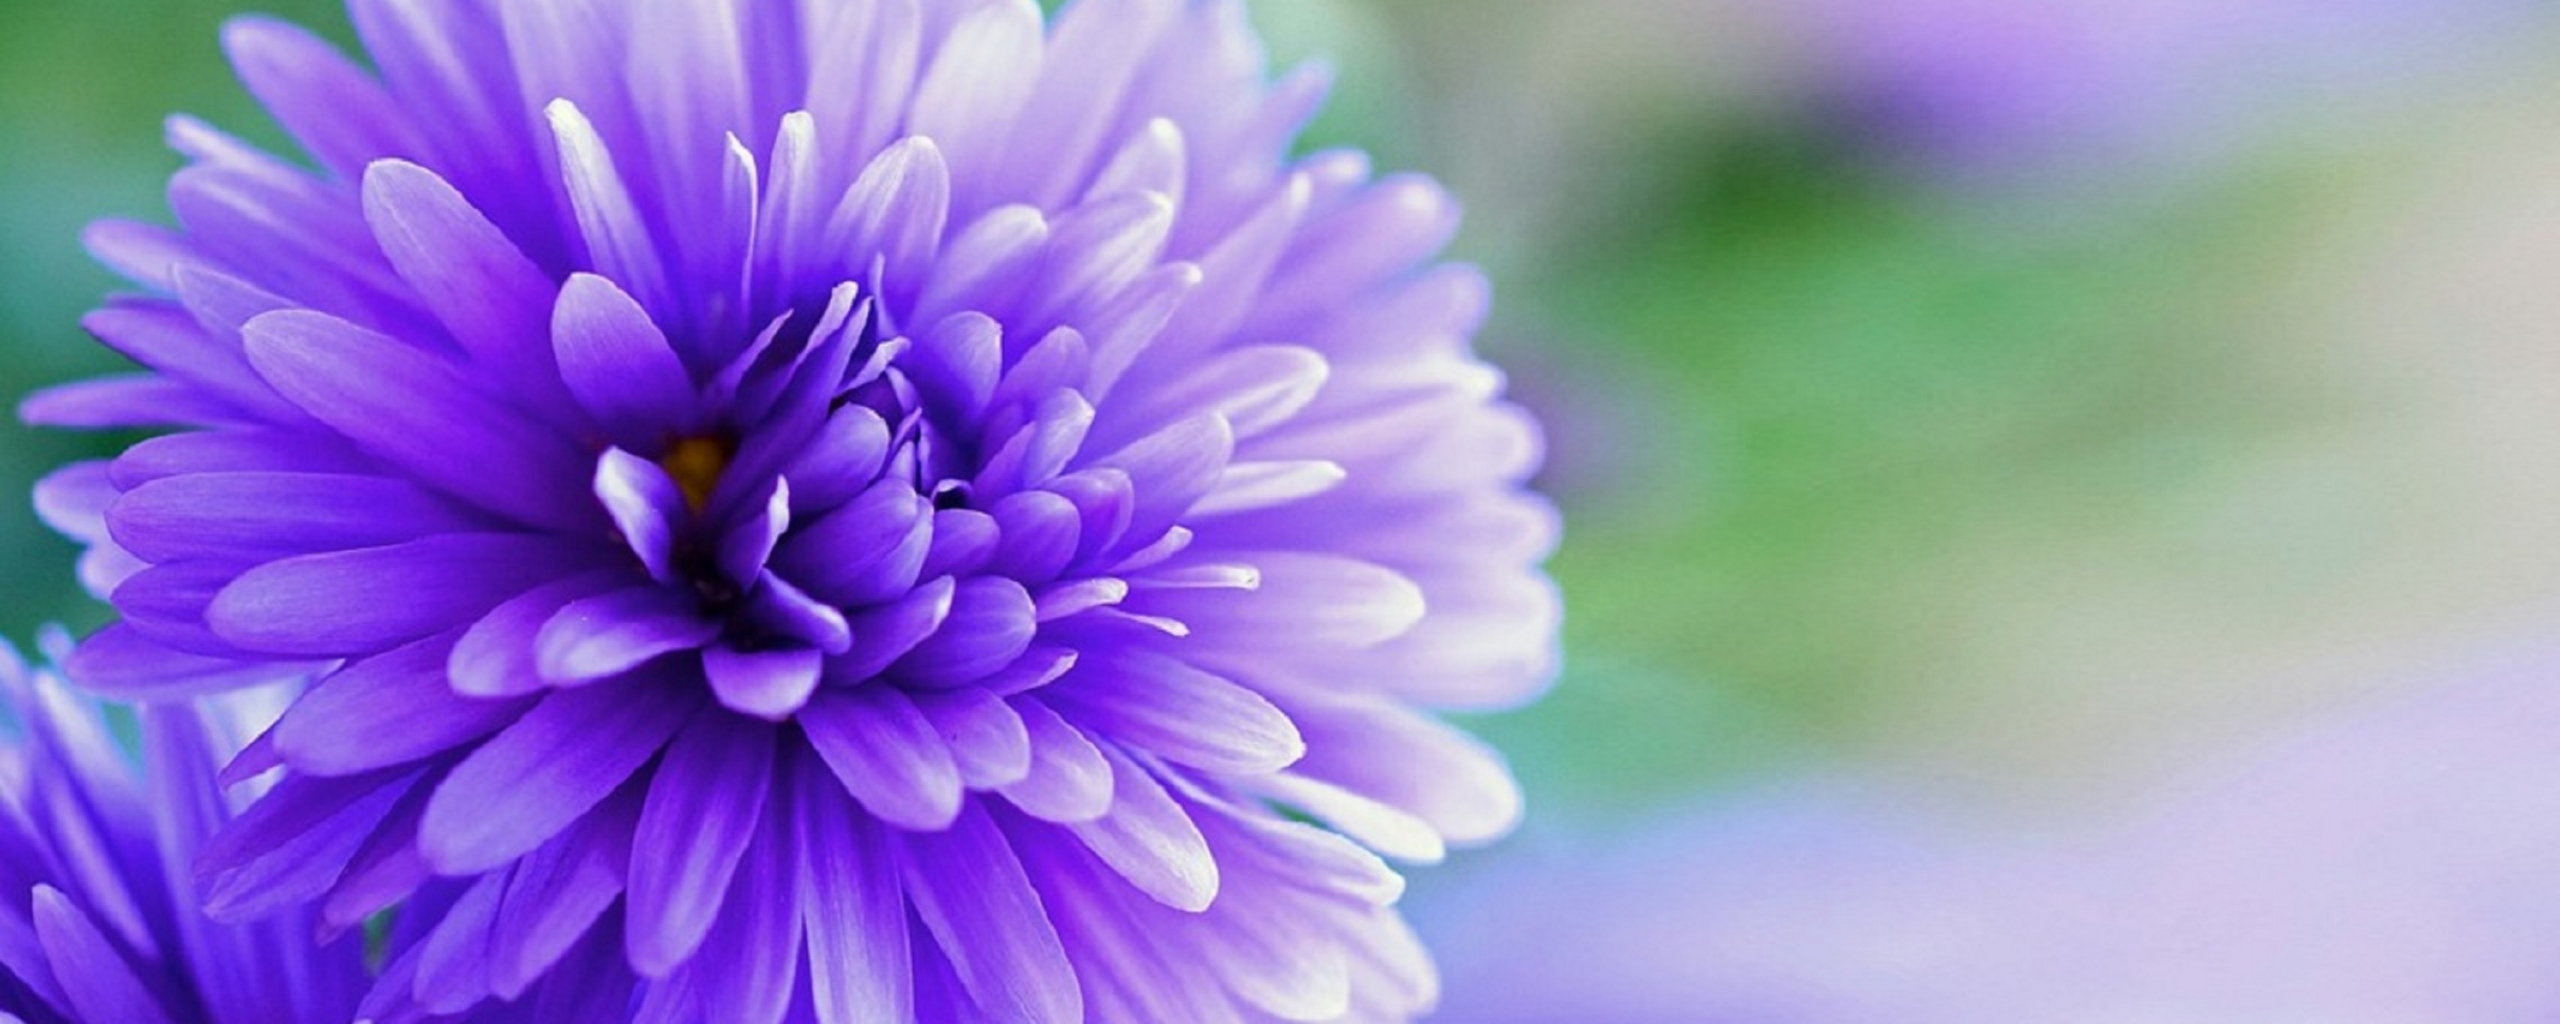 Desktop Wallpaper Purple Flower, Bloom, Close Up, Hd Image, Picture ...